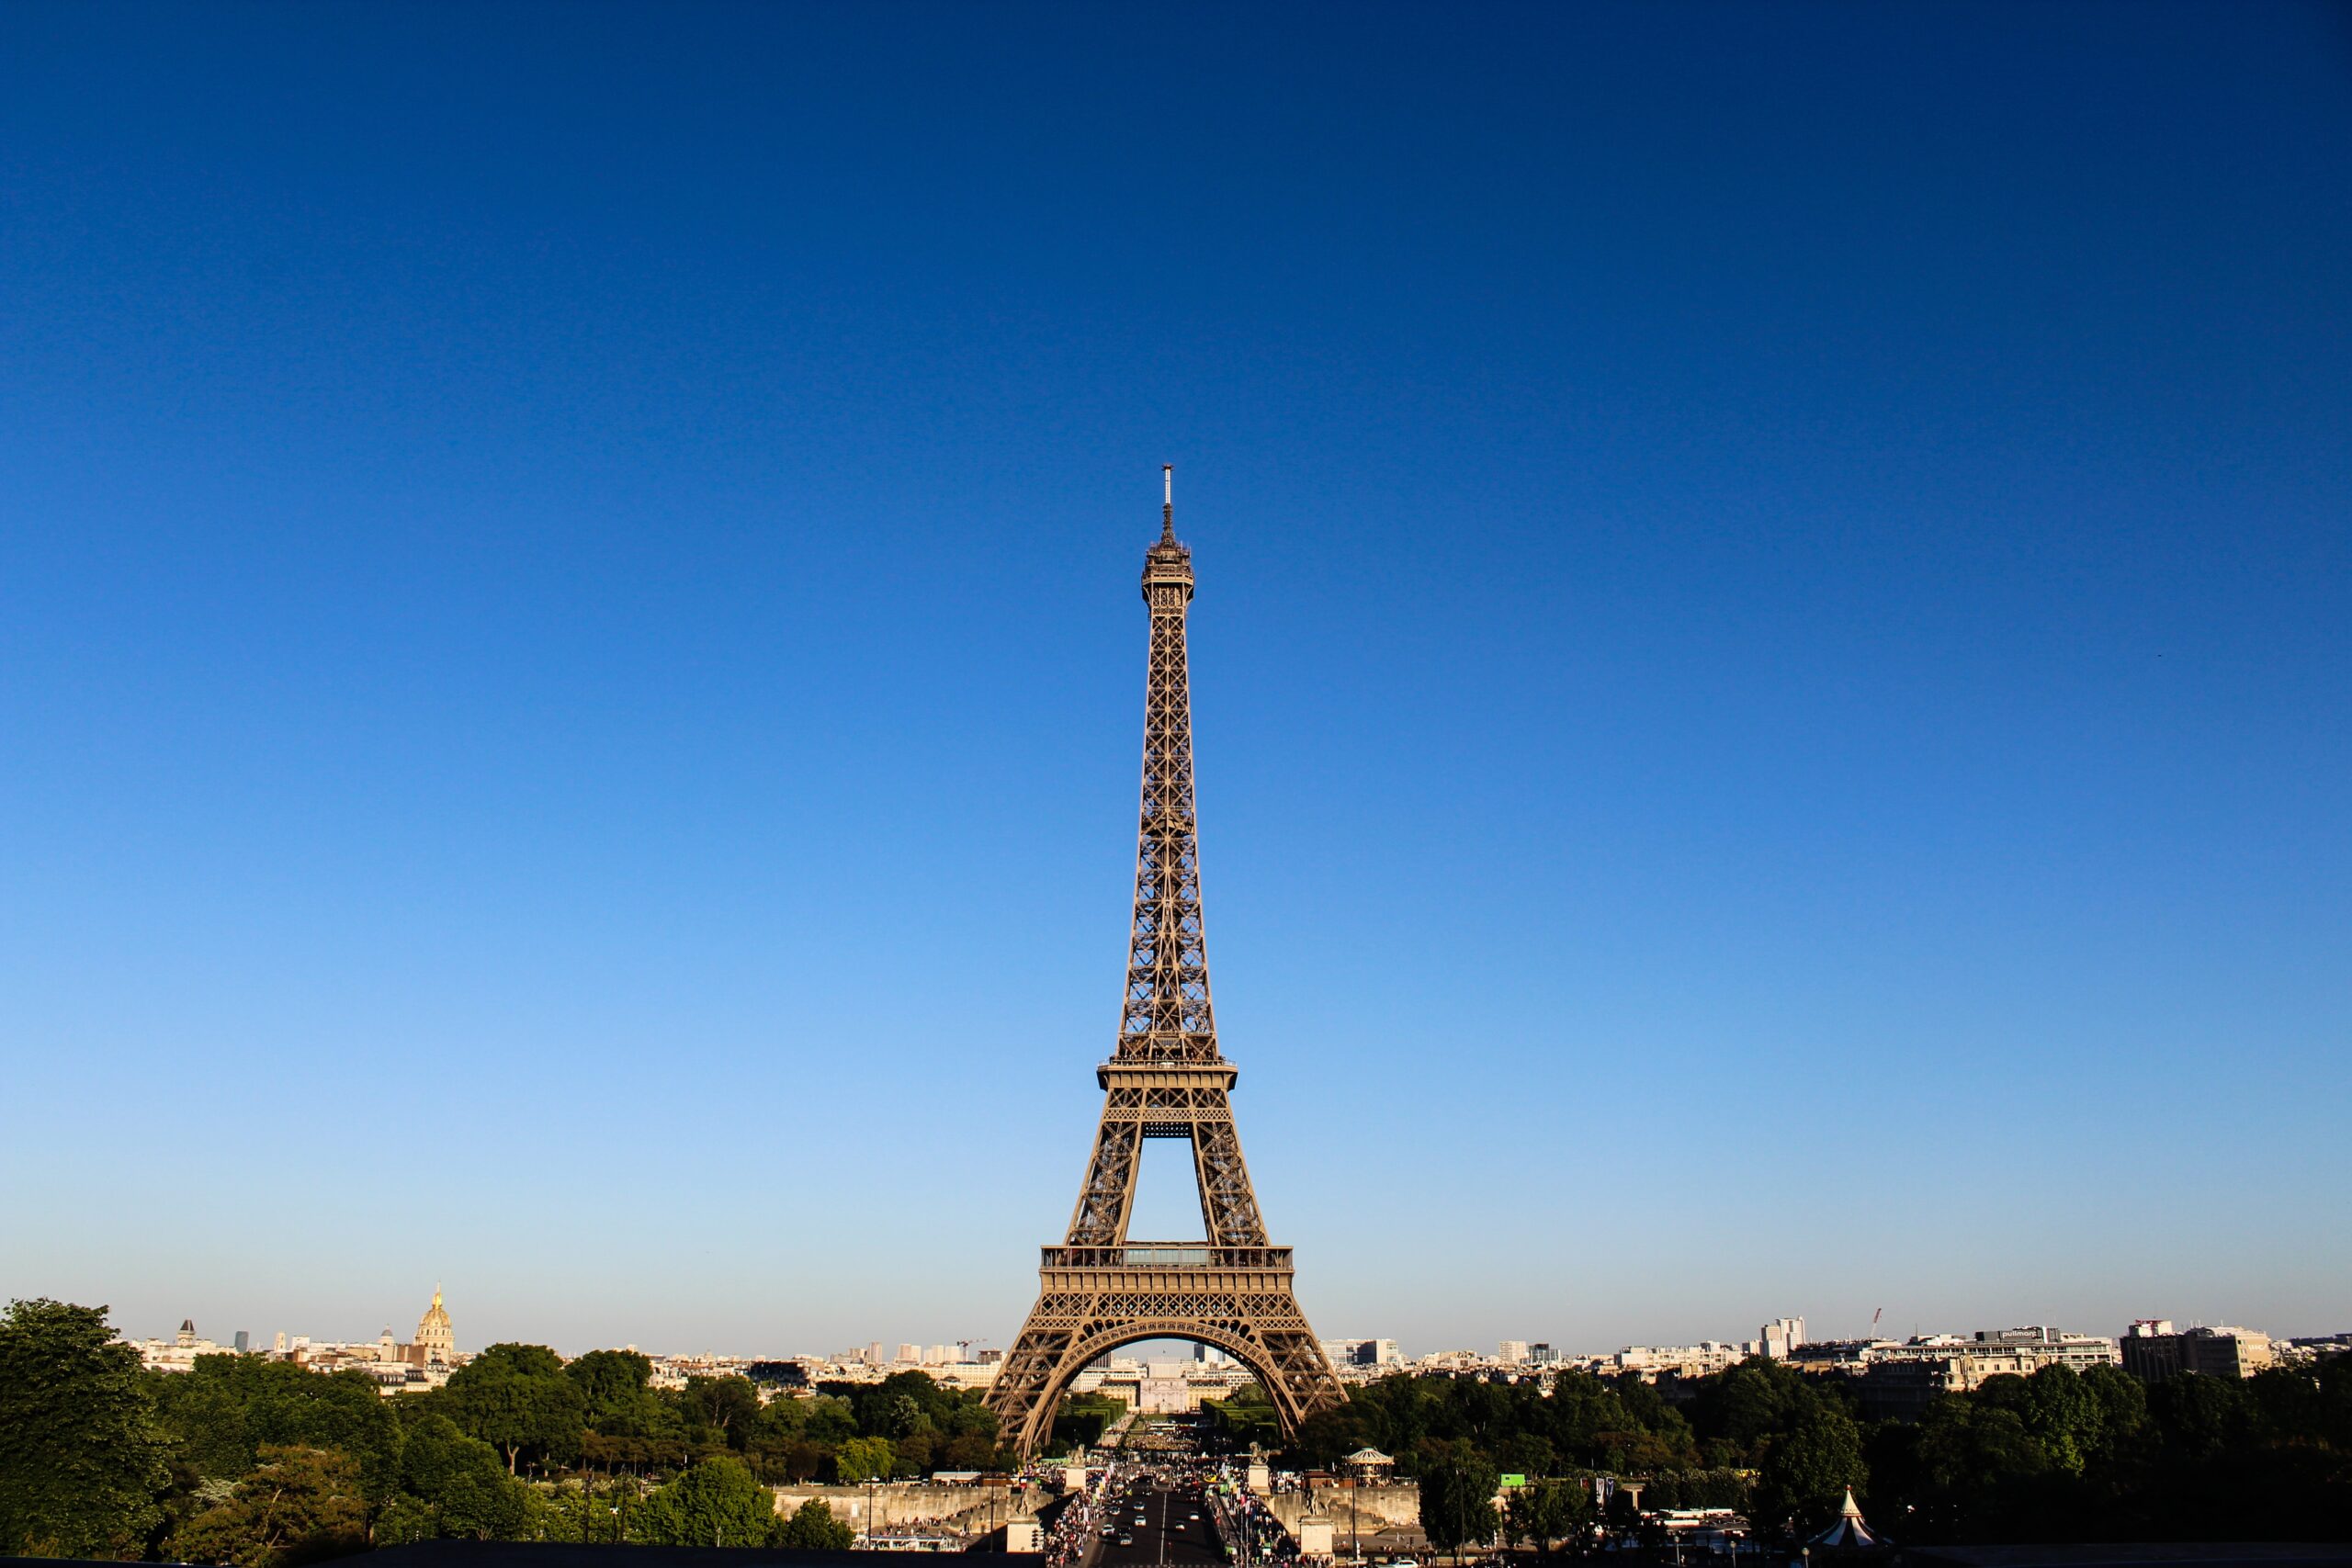 A shot of Paris’ Eiffel Tower